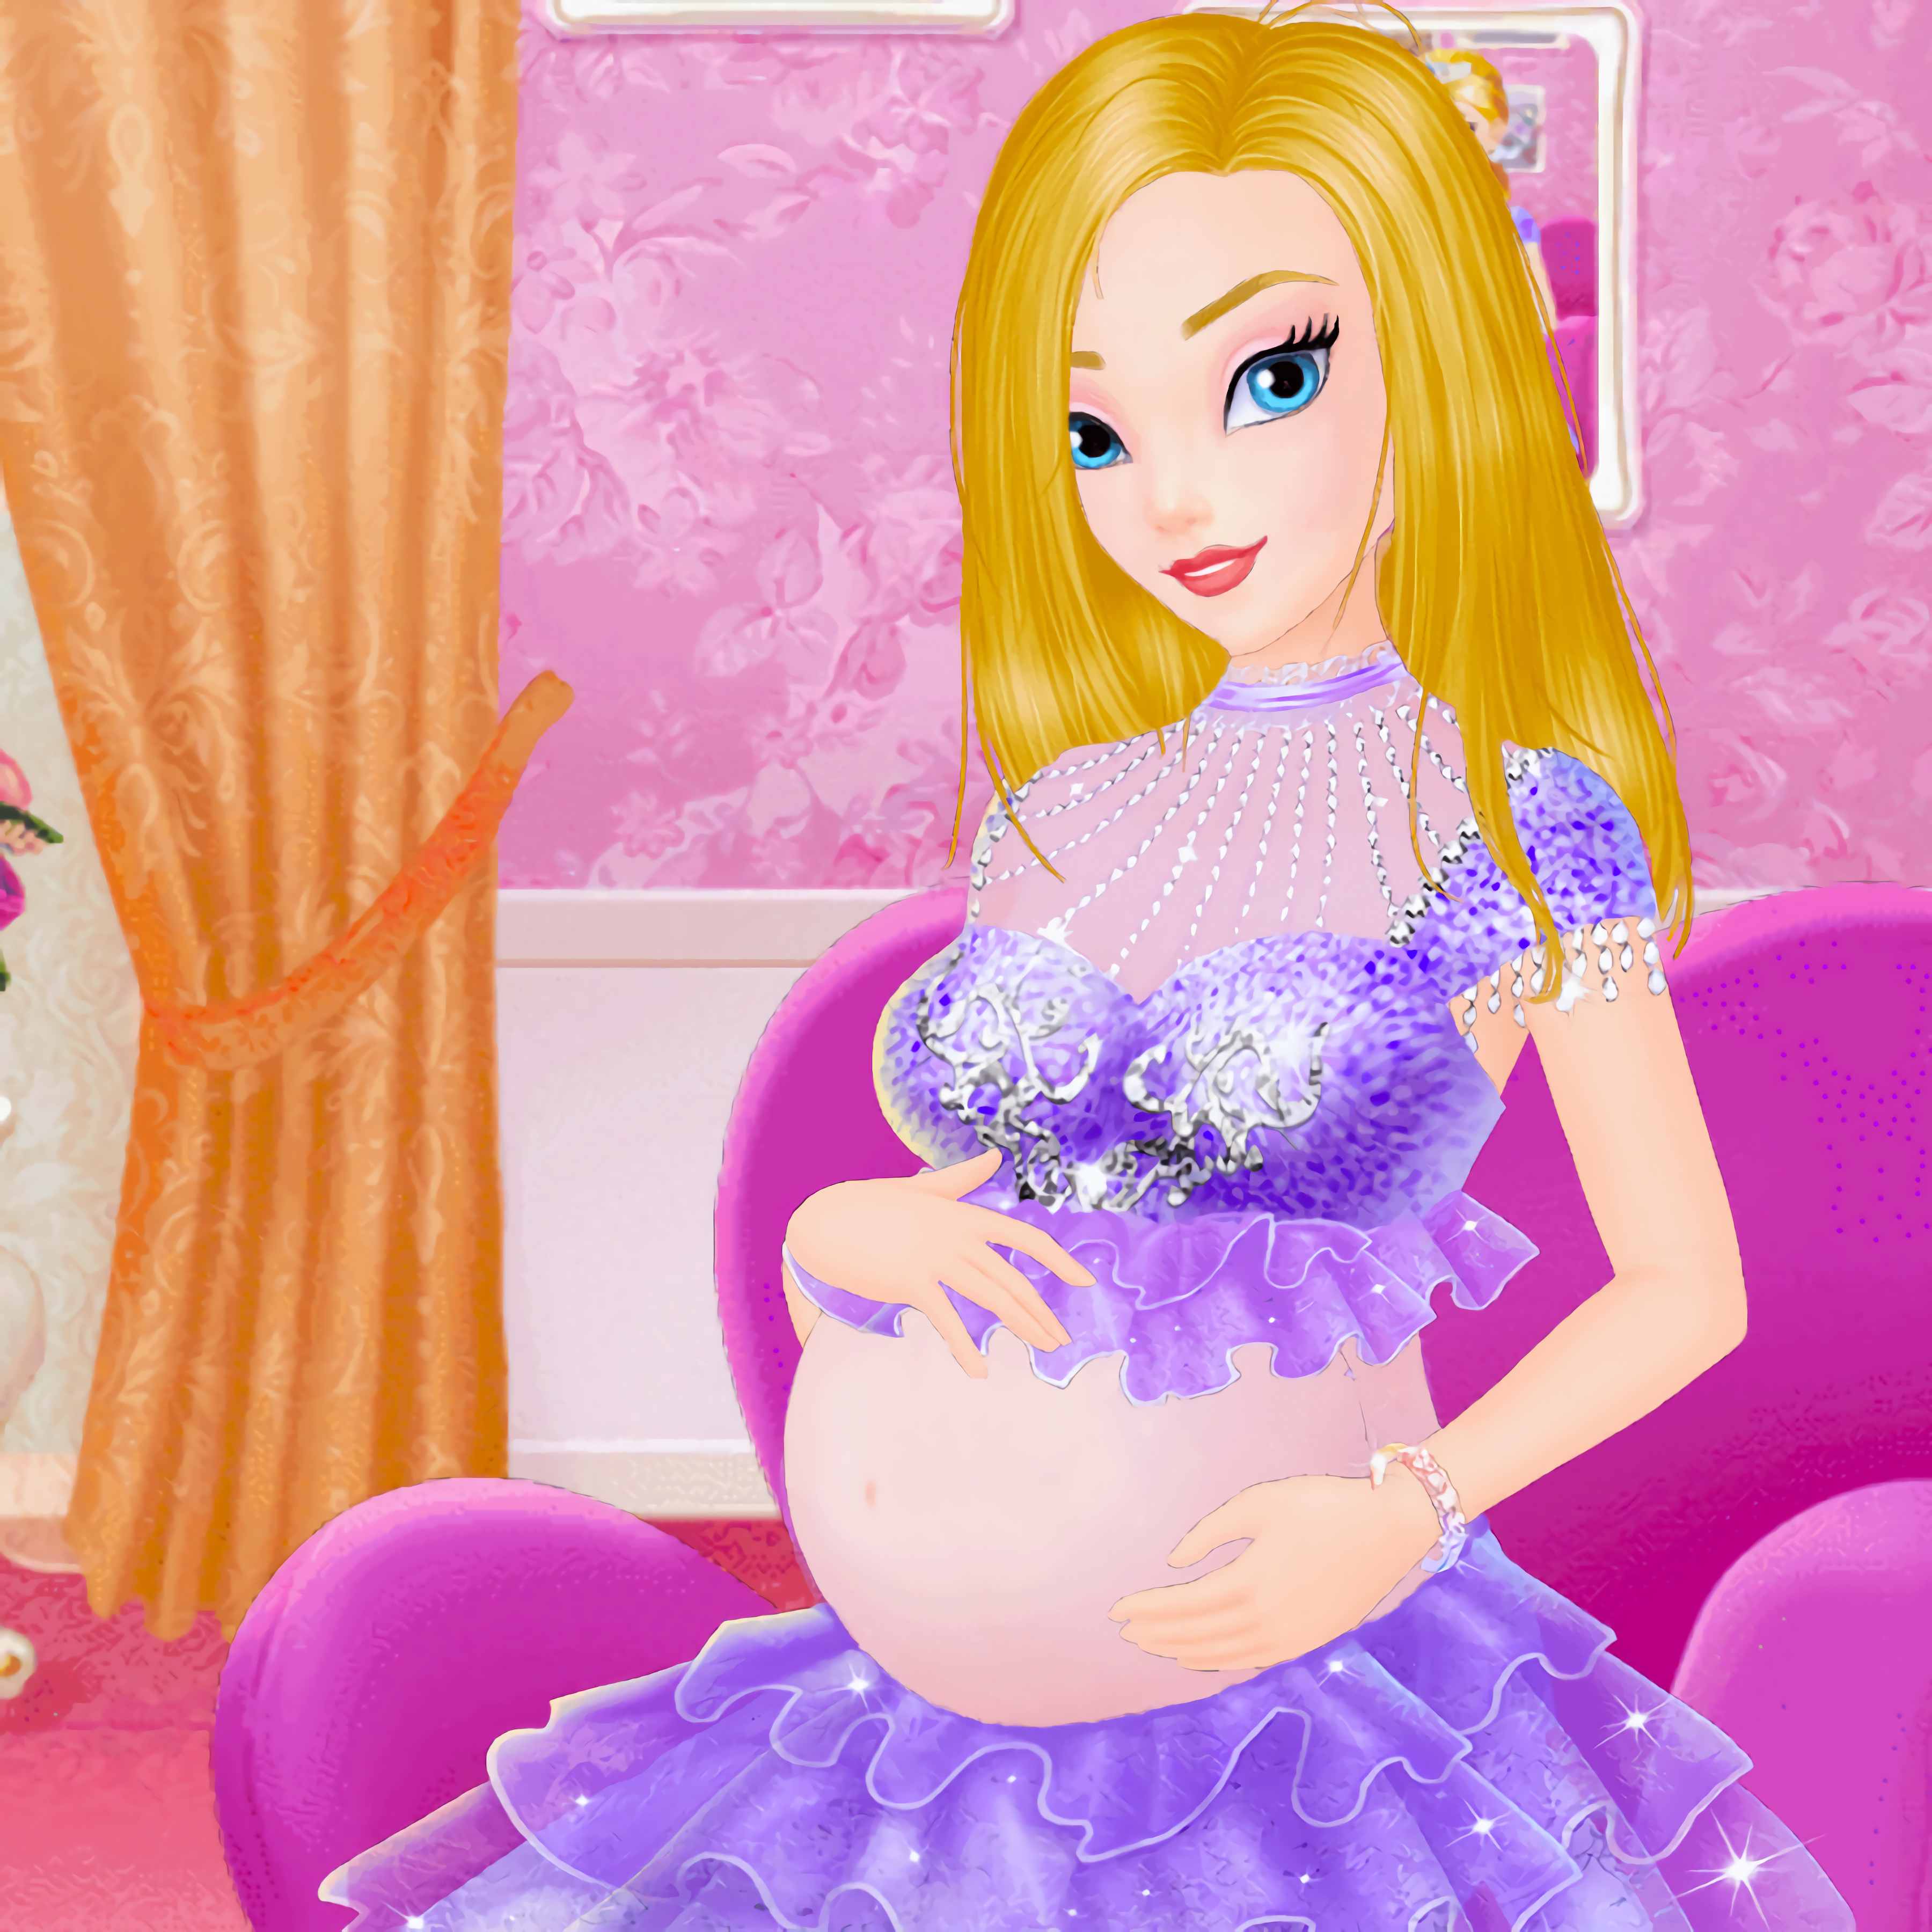 Pregnant Princess Caring